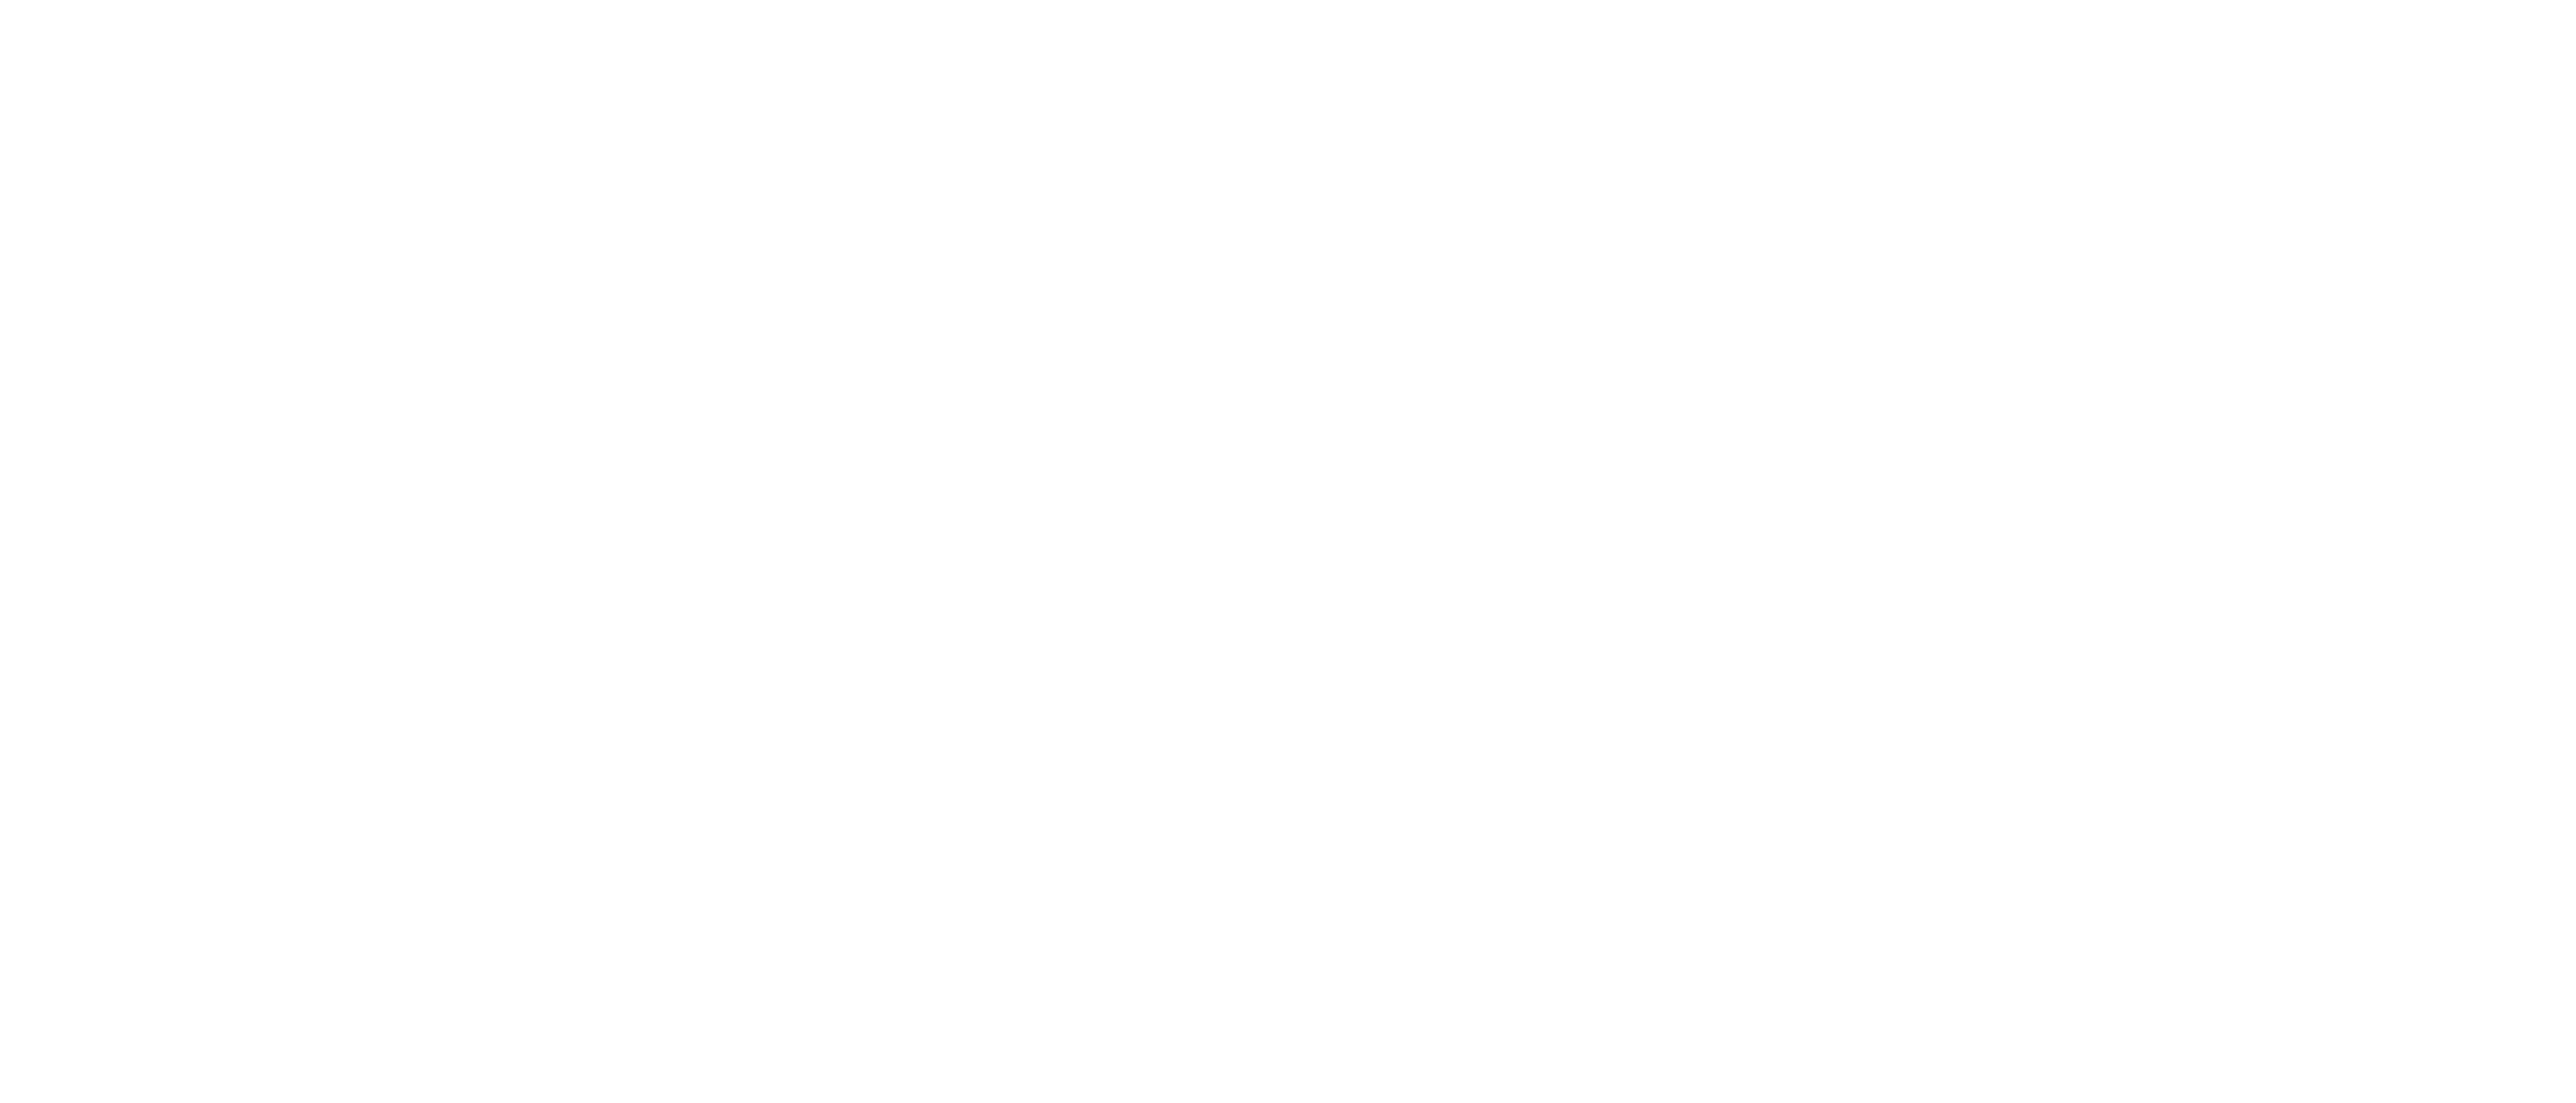 Global Tour Operators